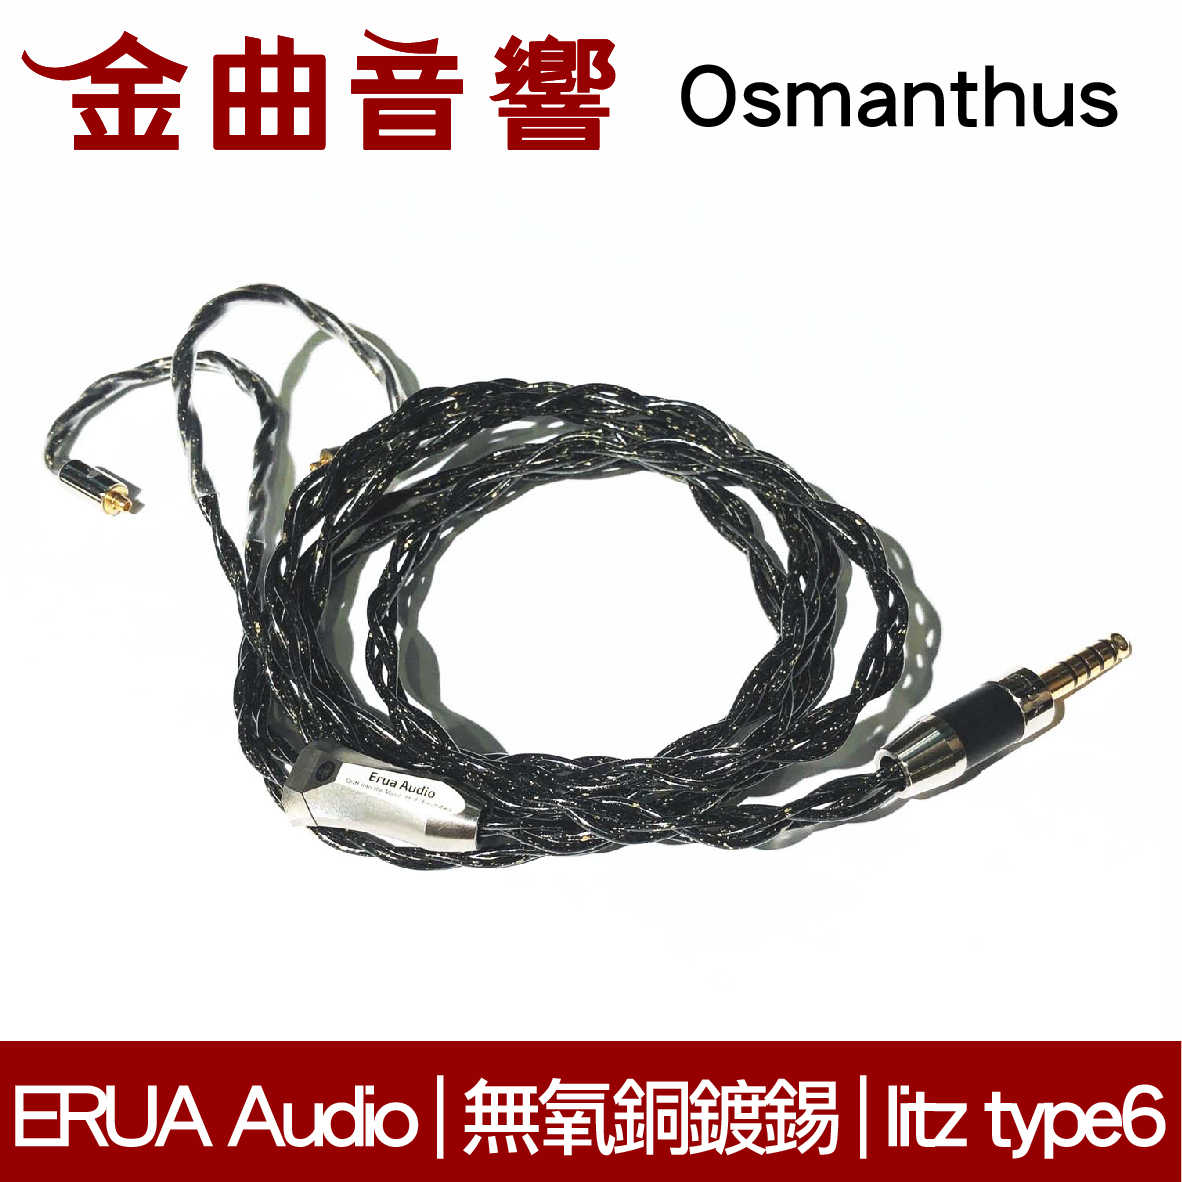 ERUA Audio Osmanthus 金木犀 無氧銅鍍錫 懸浮金箔避震 耳機 升級線 | 金曲音響